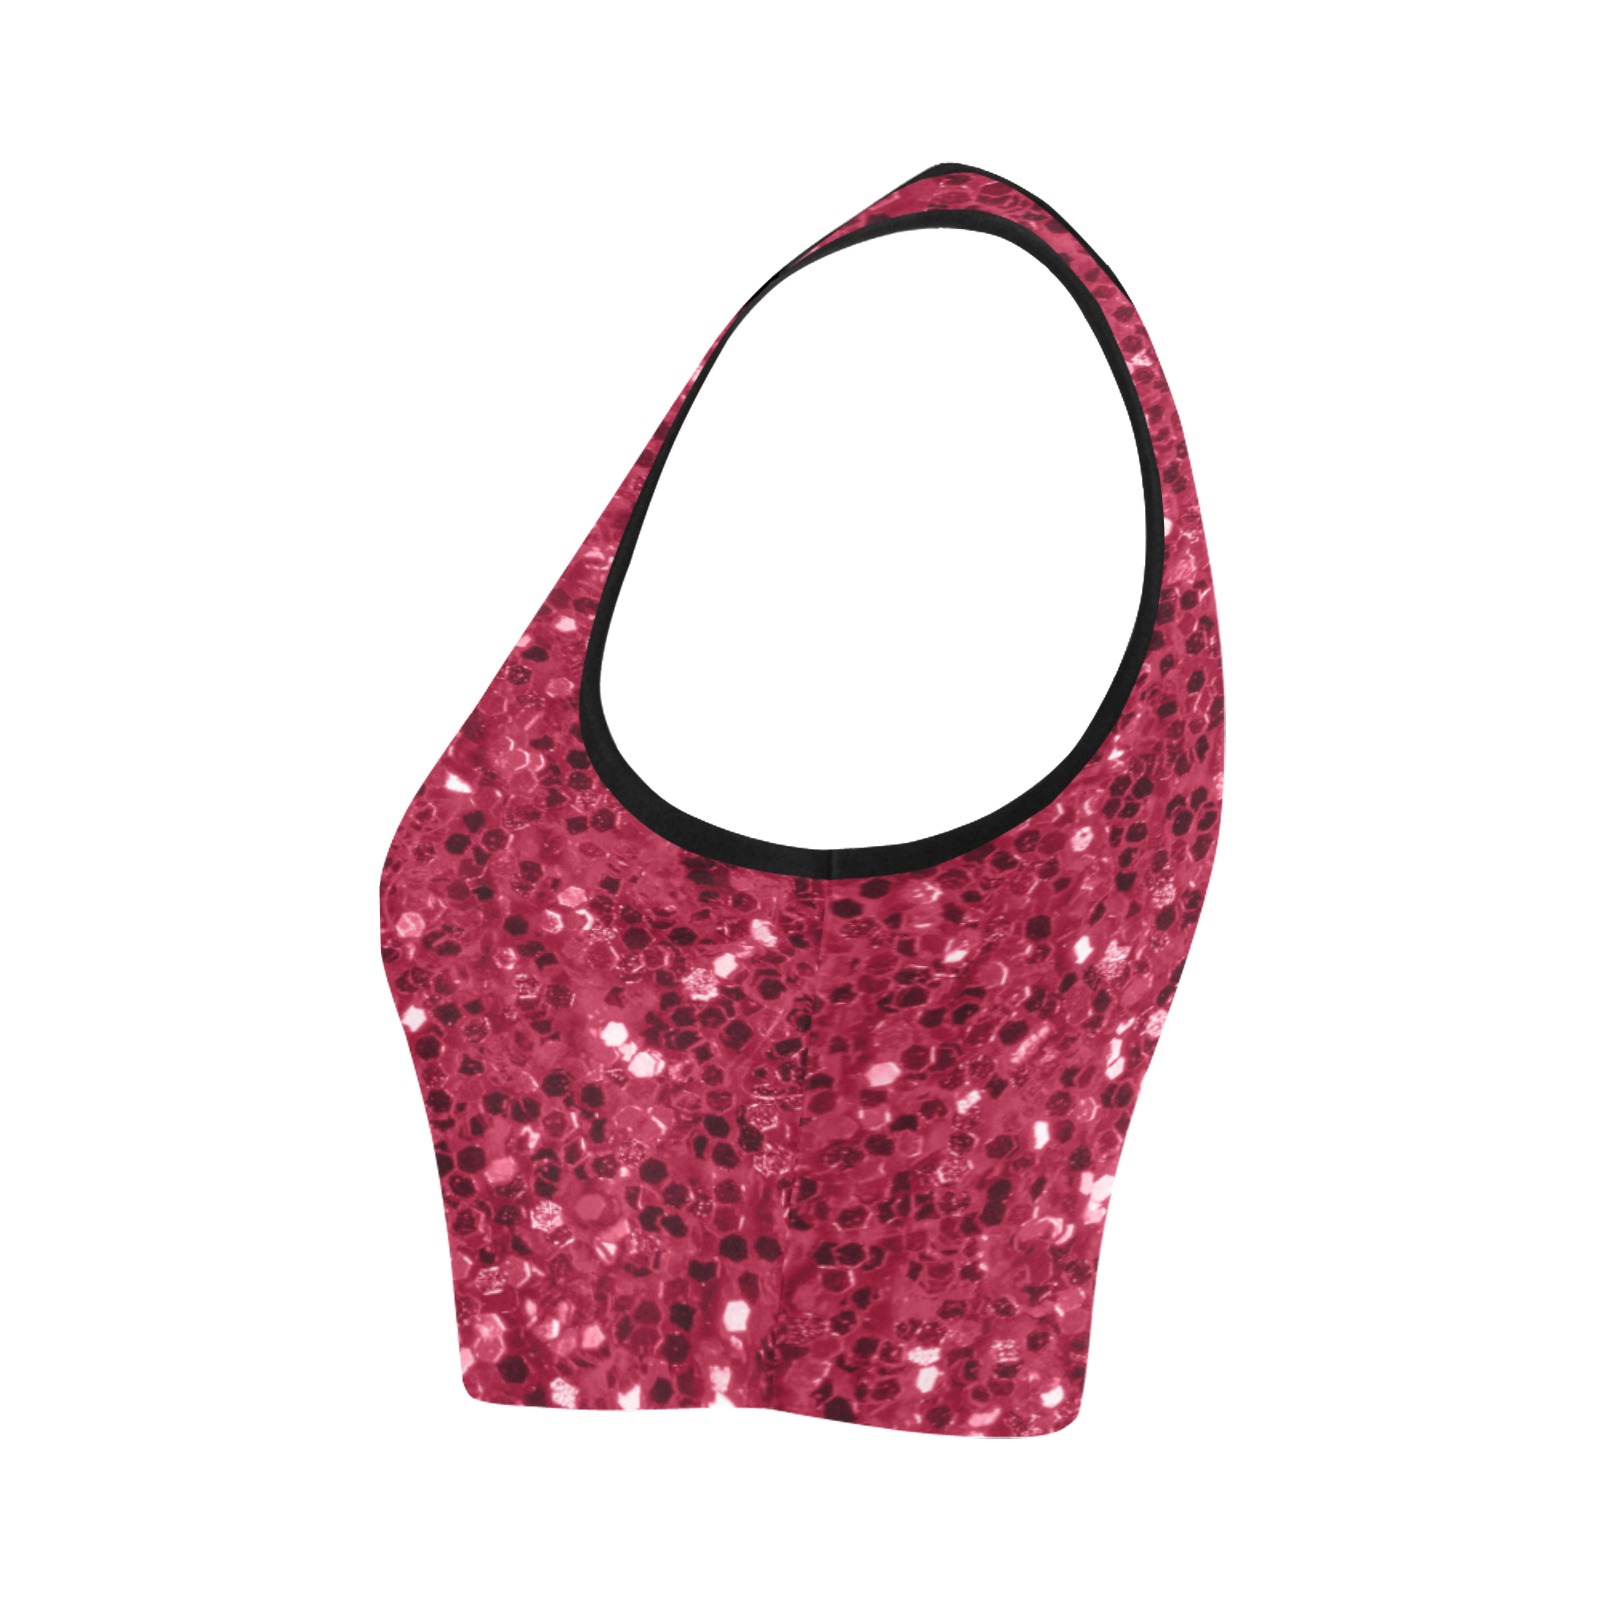 Magenta dark pink red faux sparkles glitter Women's Crop Top (Model T42)